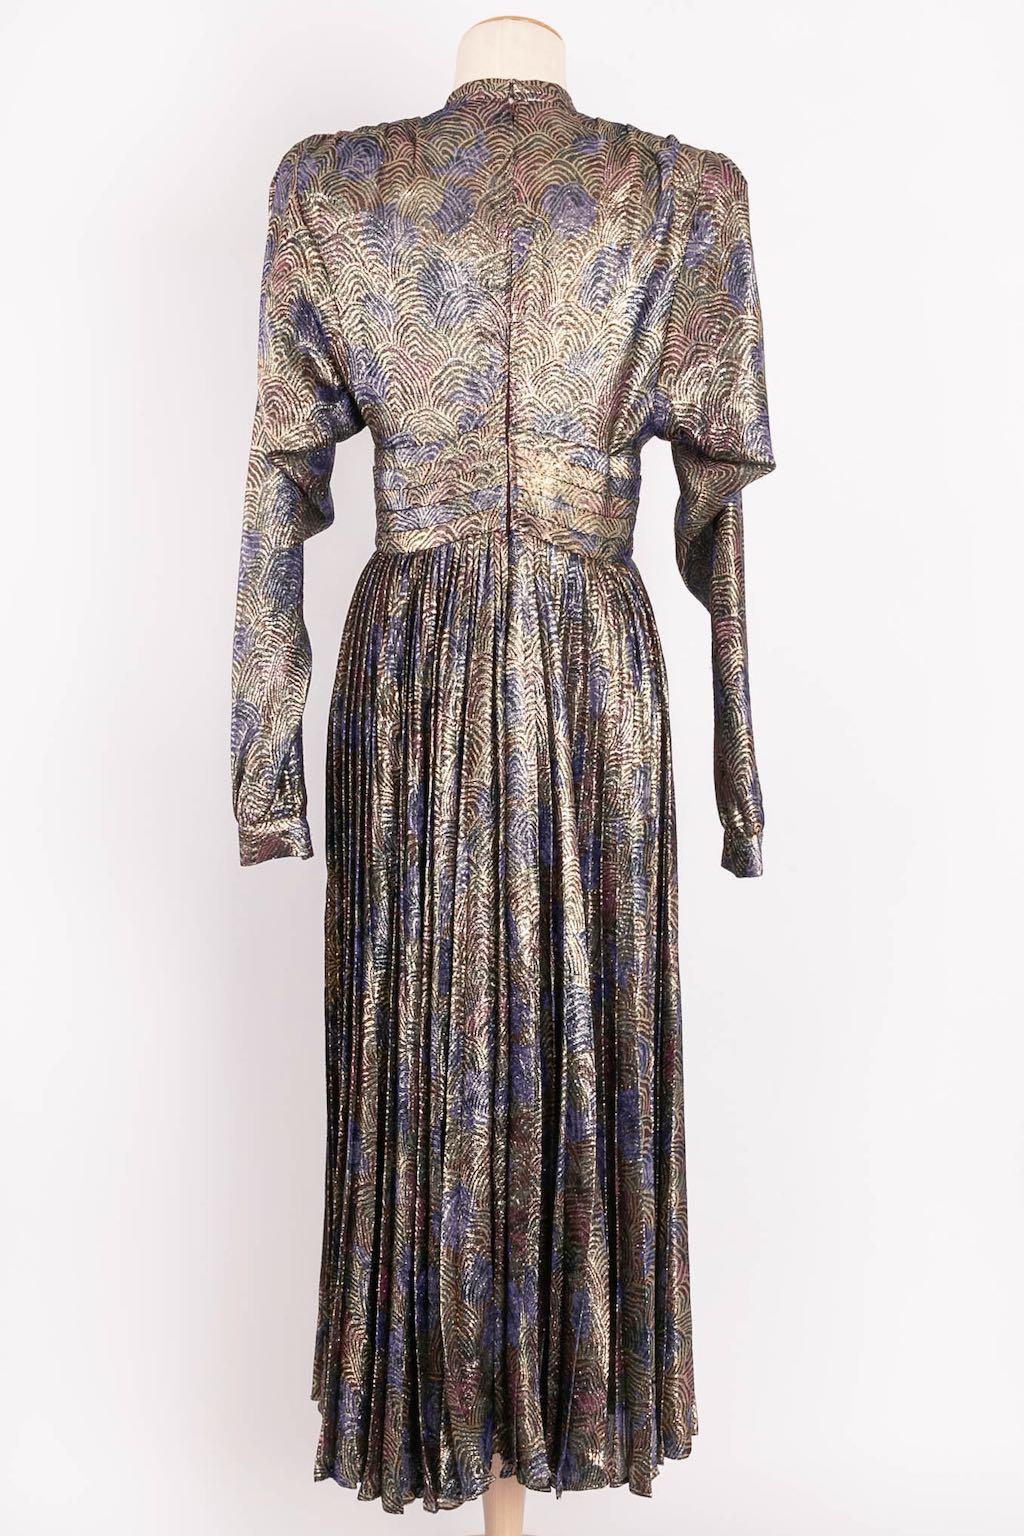 Gray Nina Ricci Lamé Dress, Size 36FR For Sale